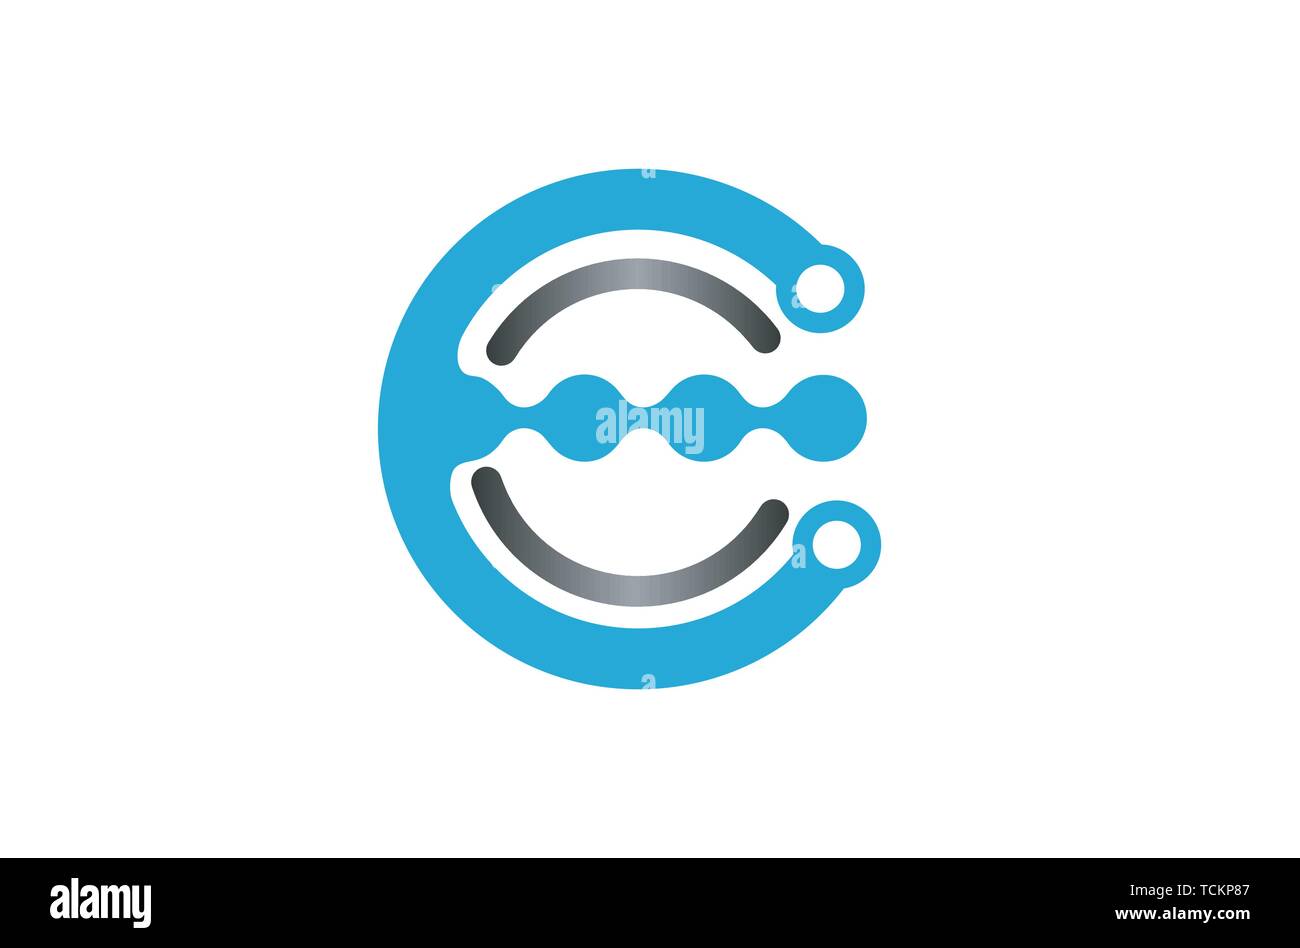 Kreative Logo Technologie sphärische Fläche mit abstrakten Formen Symbol Logo Design Illustration Stock Vektor